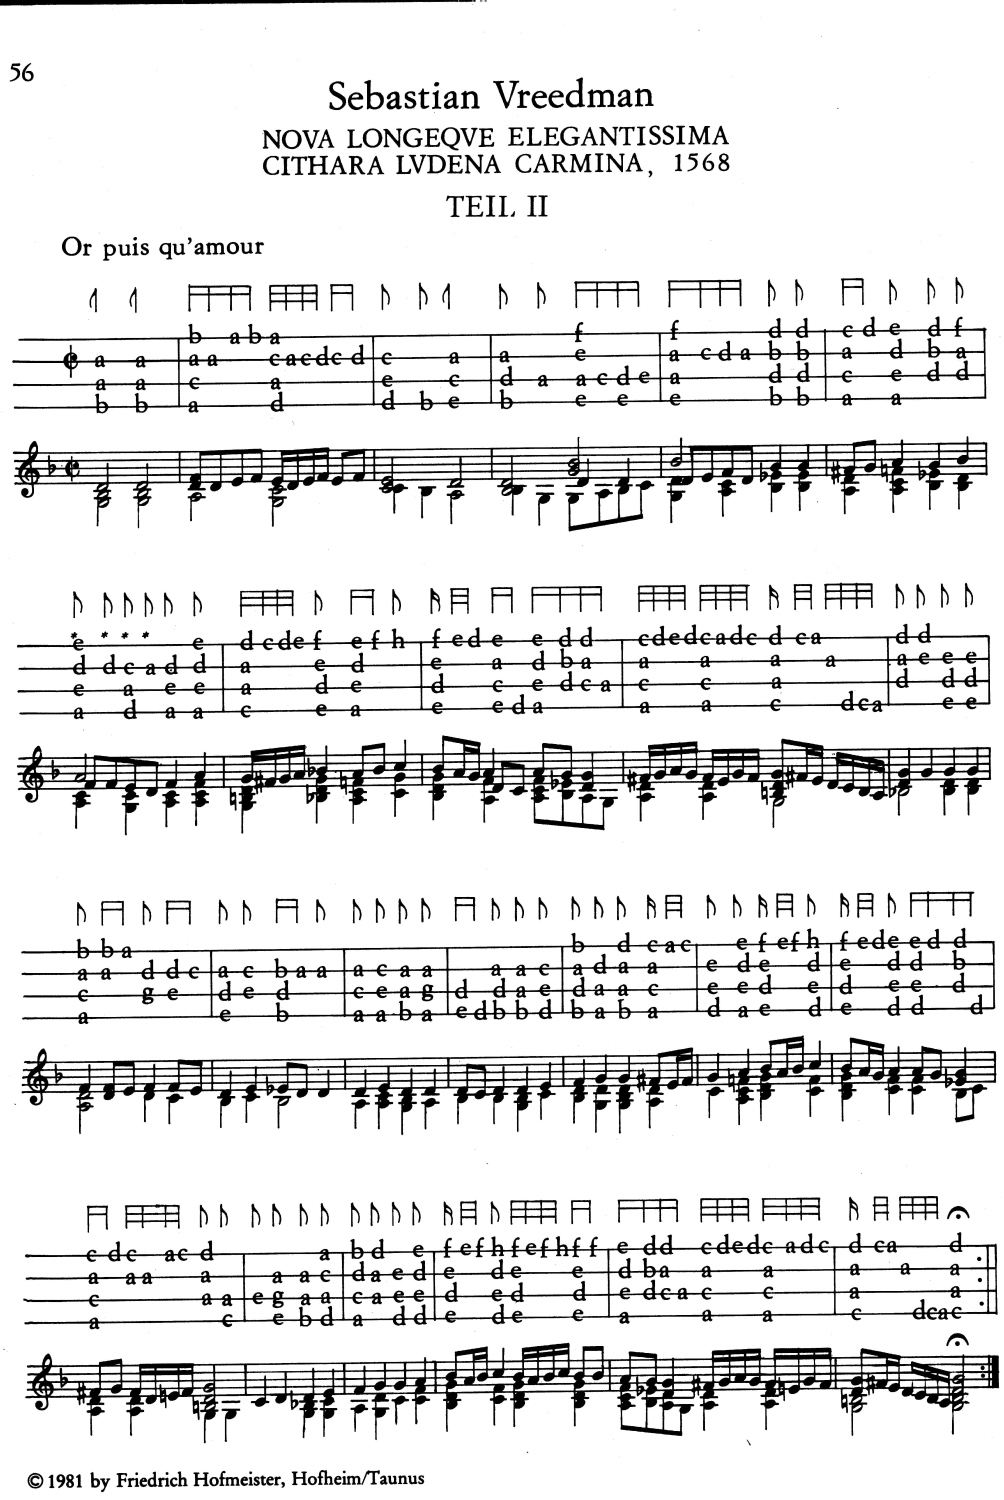 sebastian-vreedman-musik-fuer-die-cister-1568-vol2_0006.JPG